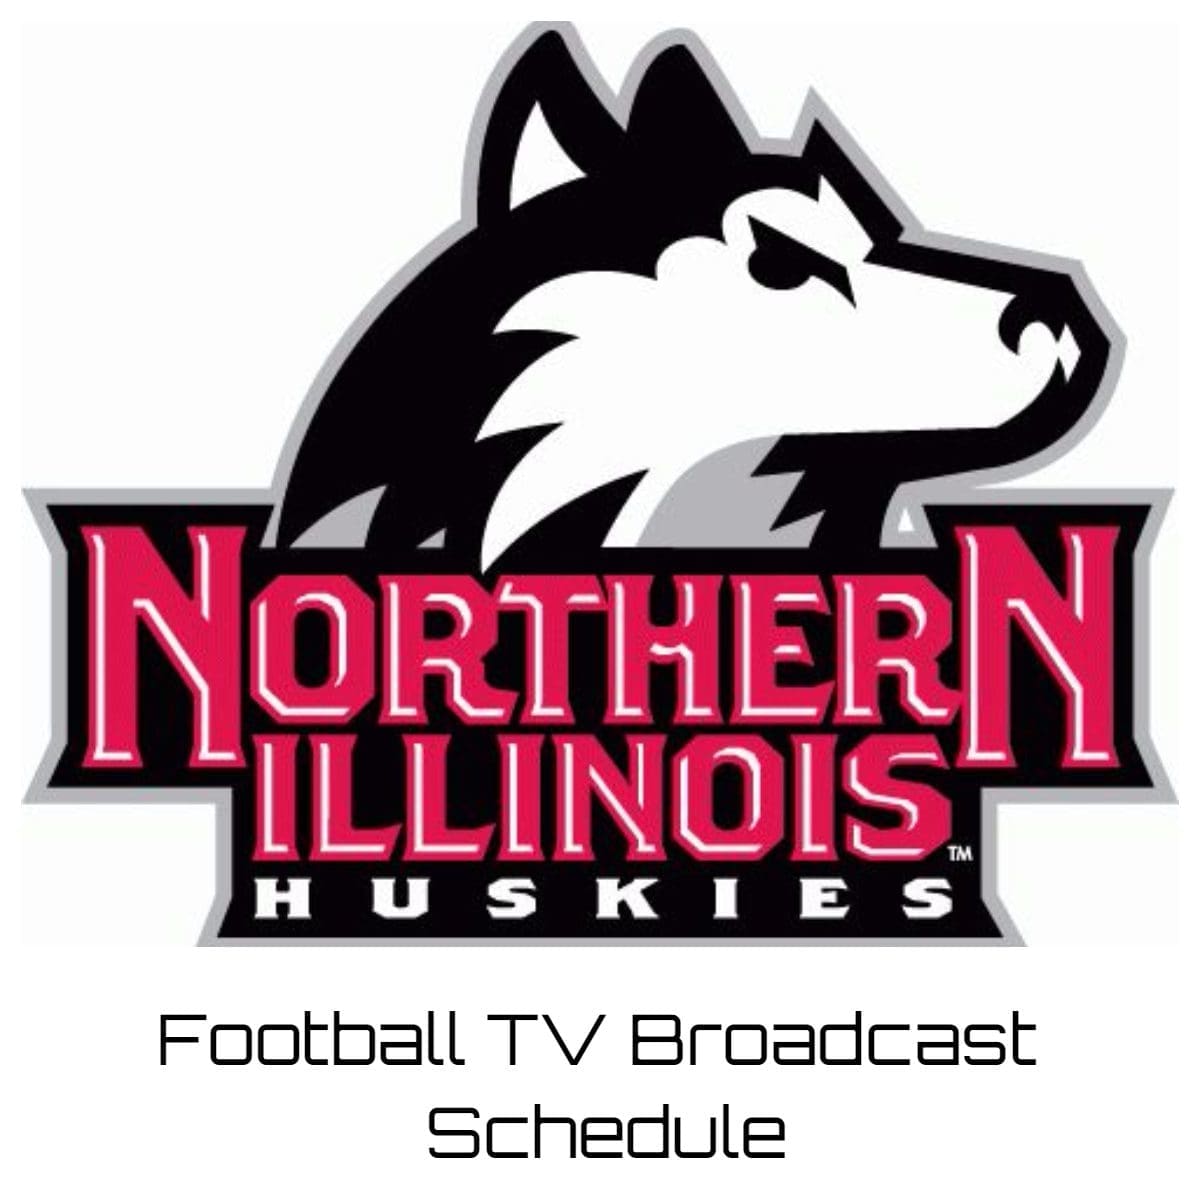 NIU Huskies Football TV Broadcast Schedule